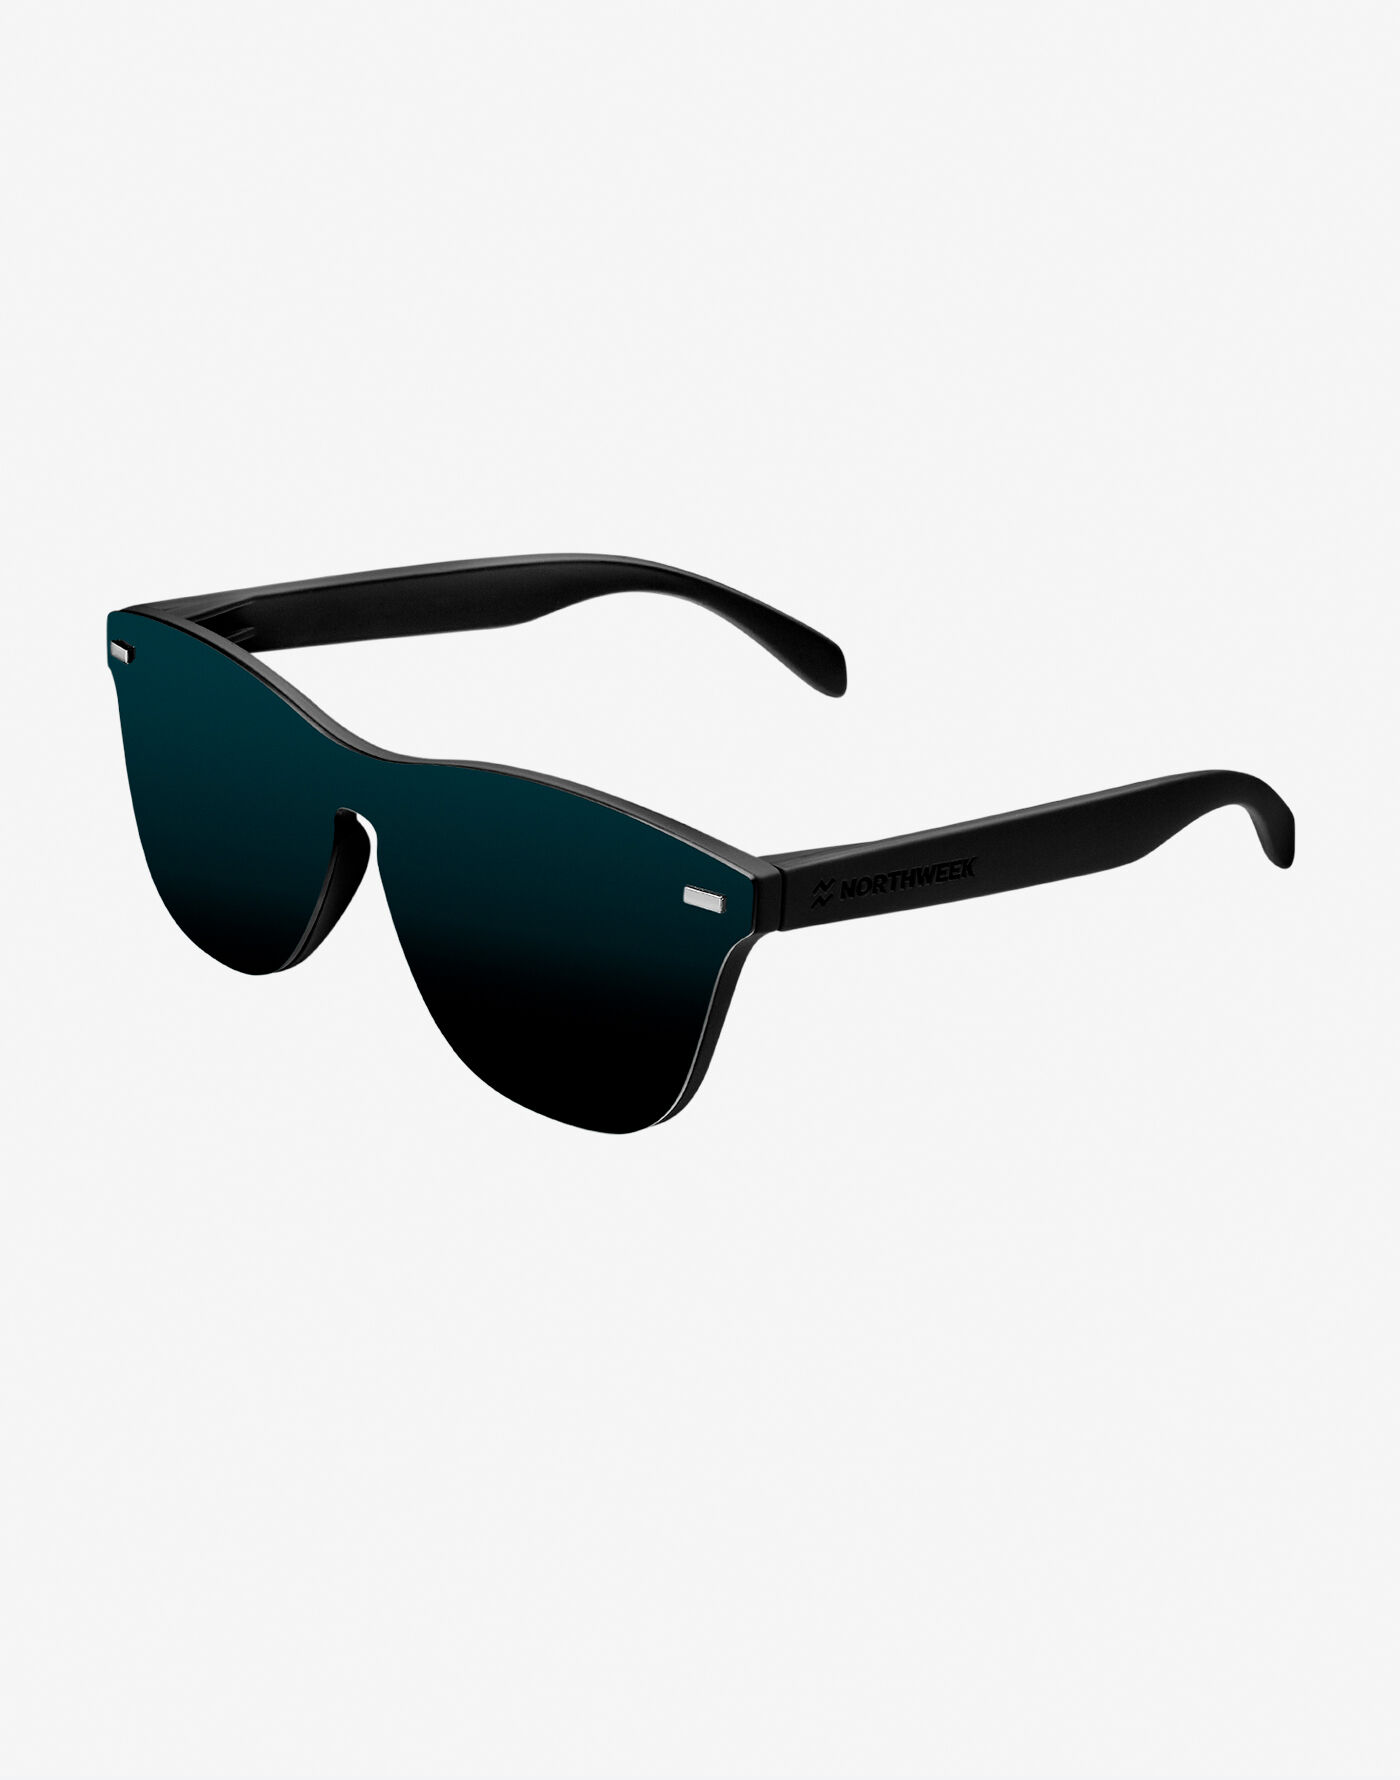 140.0 Northweek Unisex Adults’ Regular Phantom All Black Sunglasses 